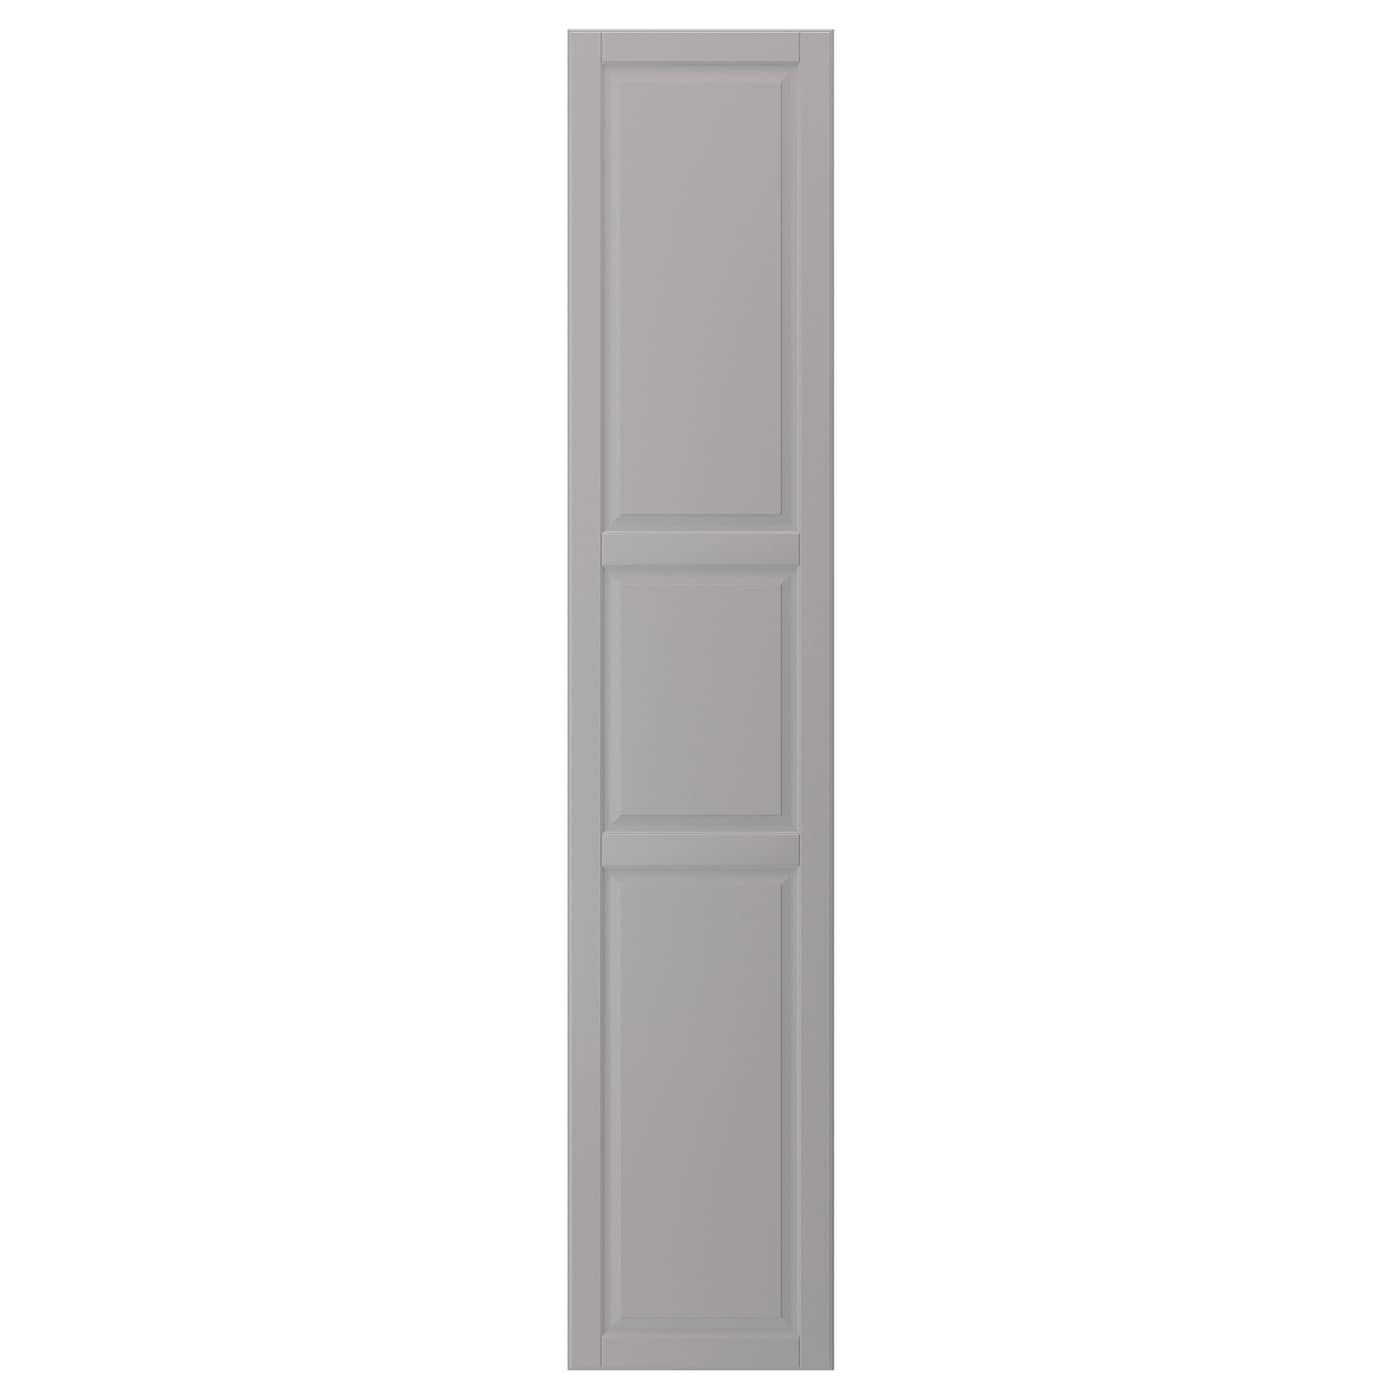 Фасад - IKEA BODBYN, 200х40 см, серый, БУДБИН ИКЕА